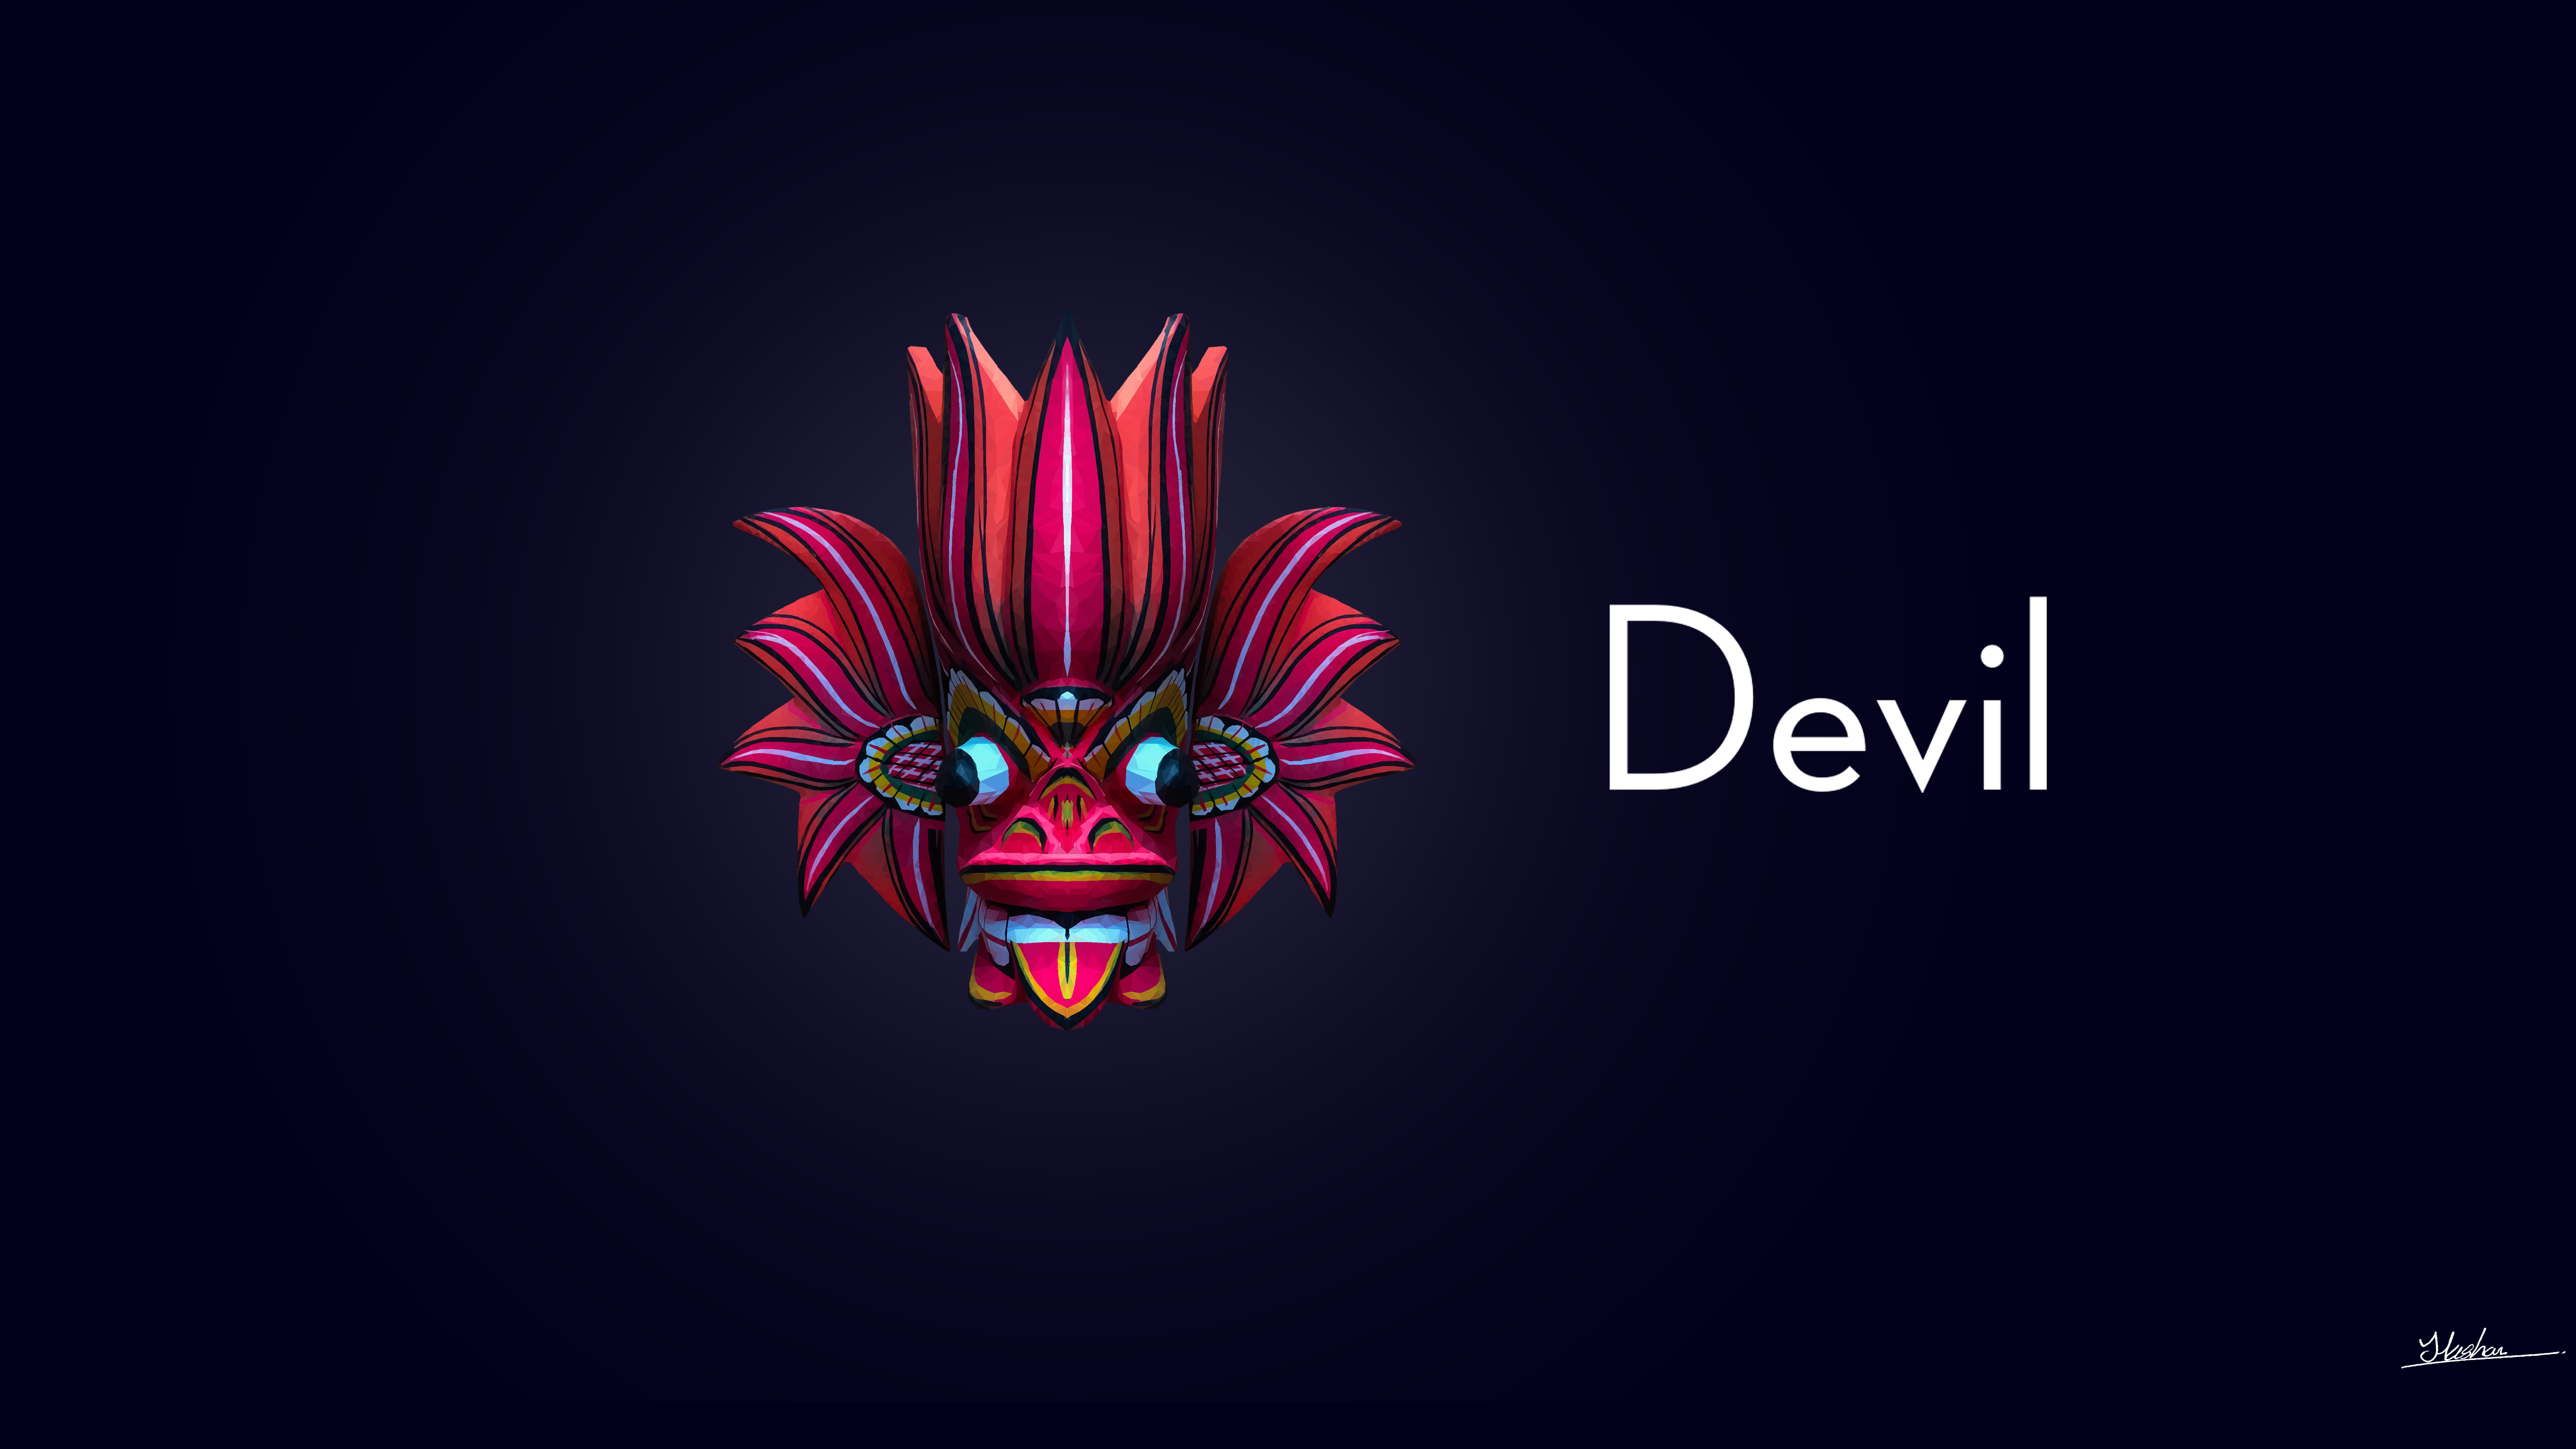 Sri Lankan Devil Mask 4k Ultra HD Wallpaper Background Image